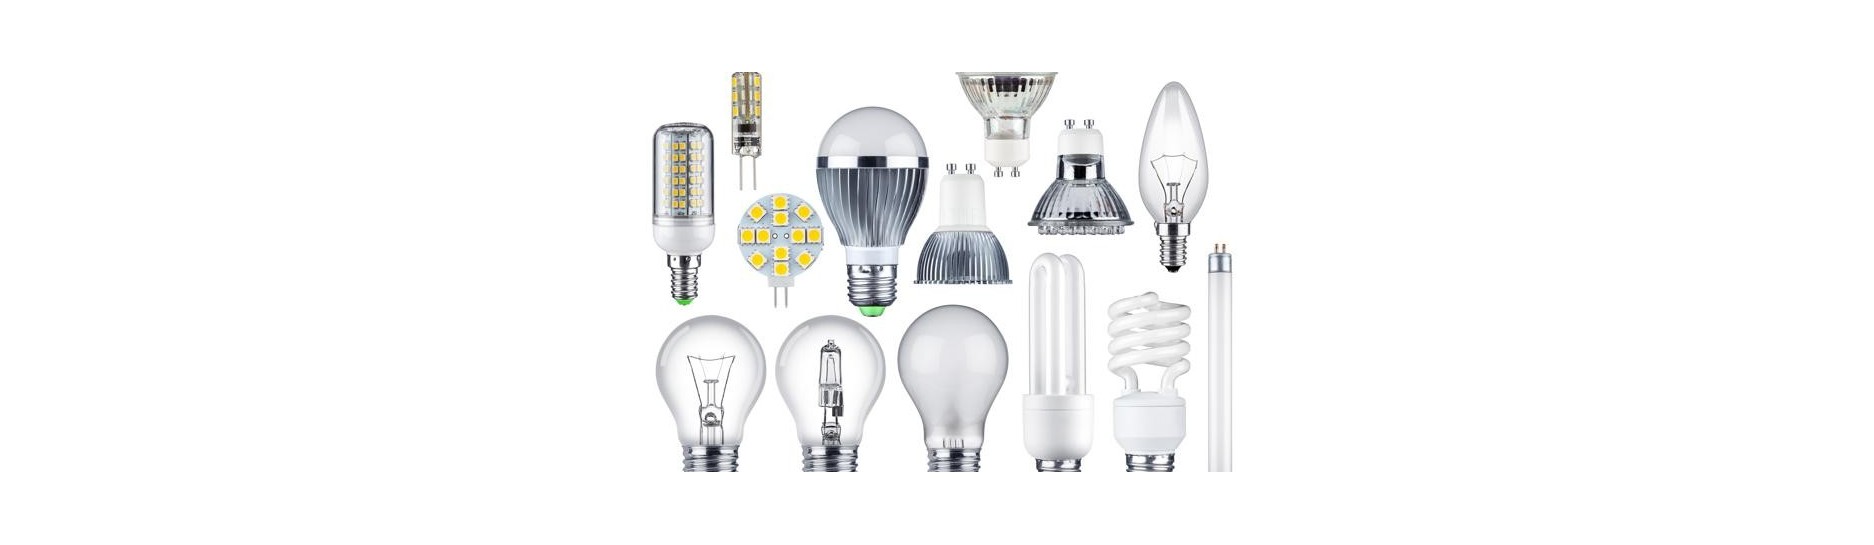 Bombillas LED | Comprar bombillas LED